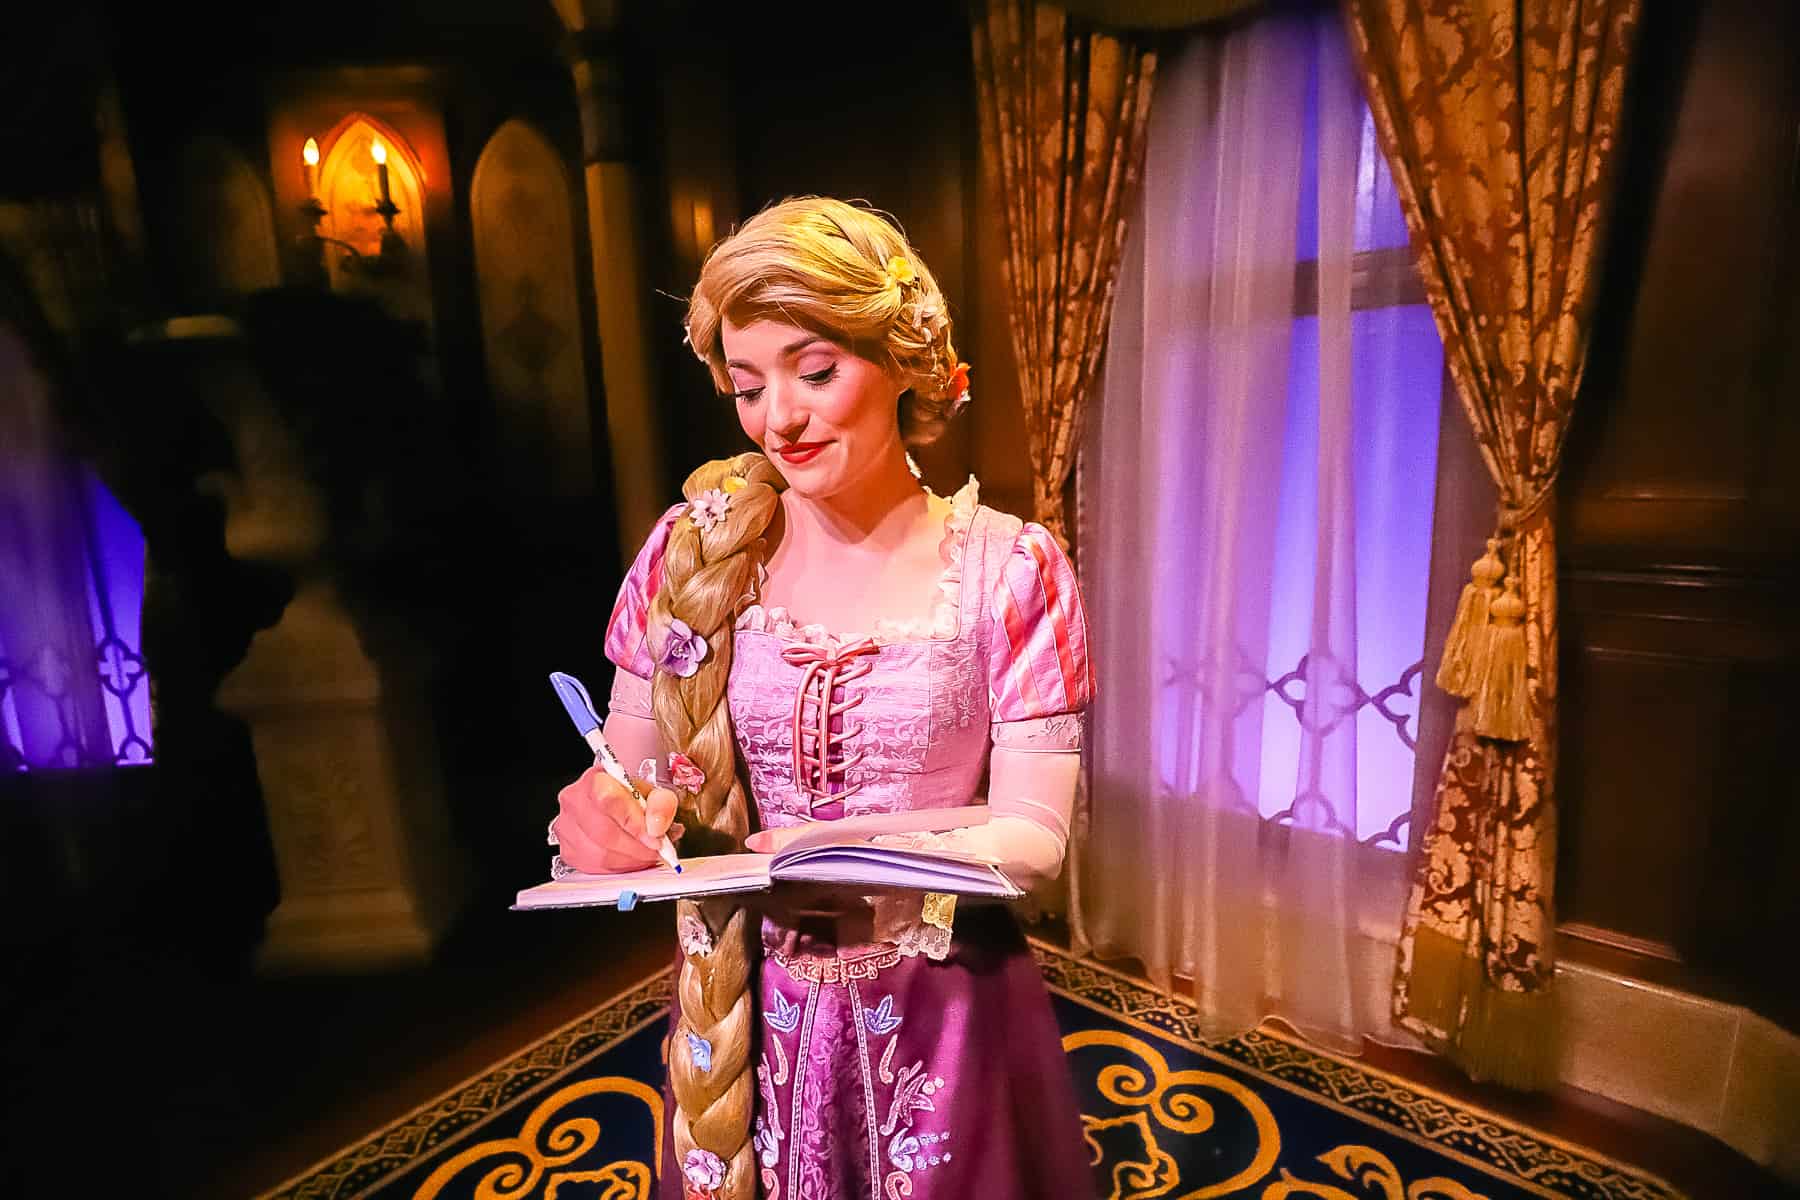 Rapunzel signing her autograph. 